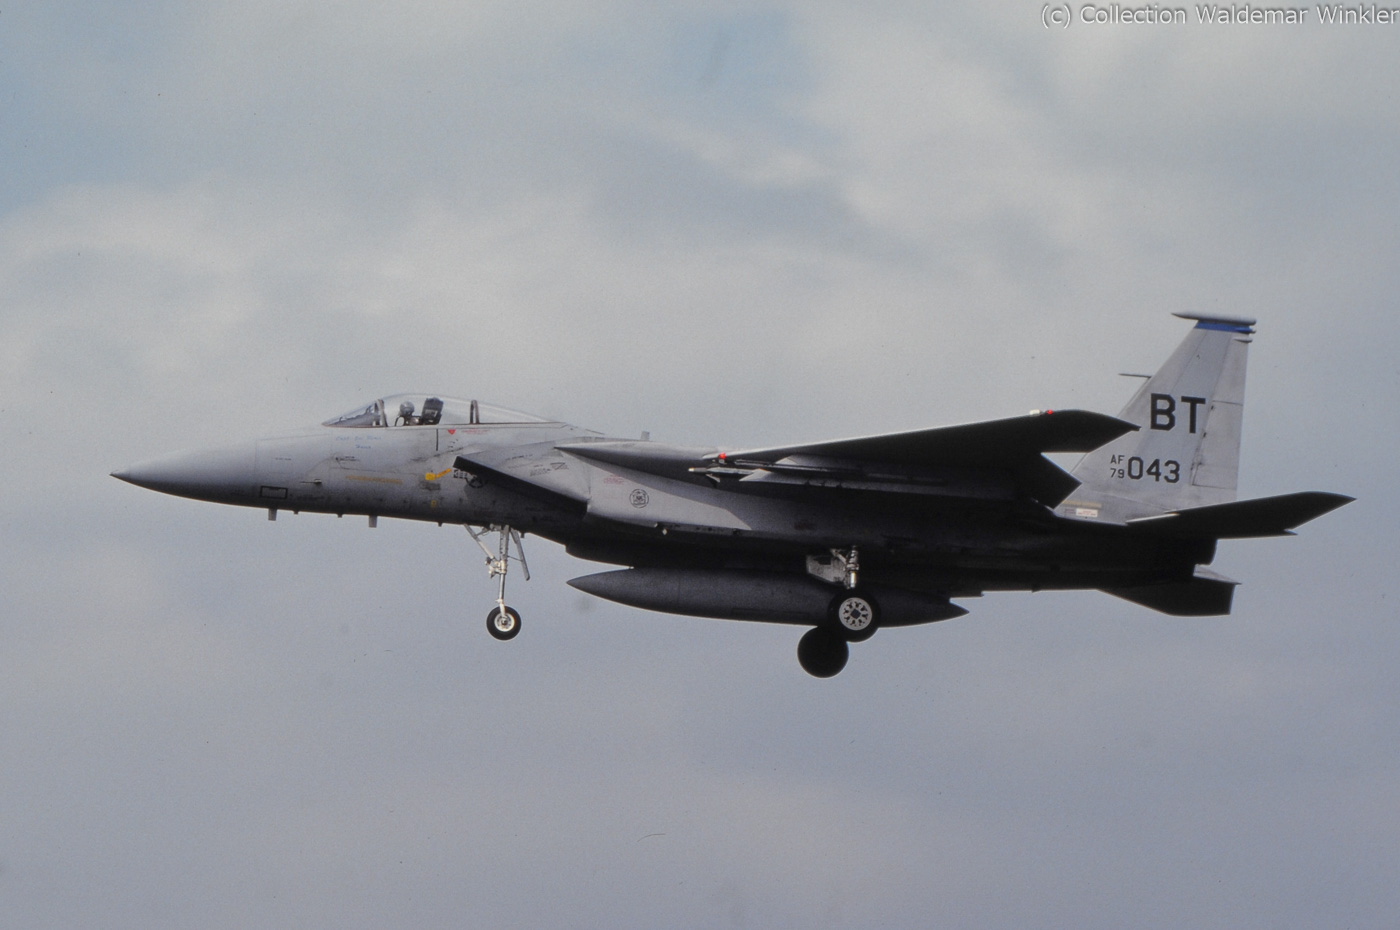 F-15A_Strike_Eagle_DSC_2891.jpg